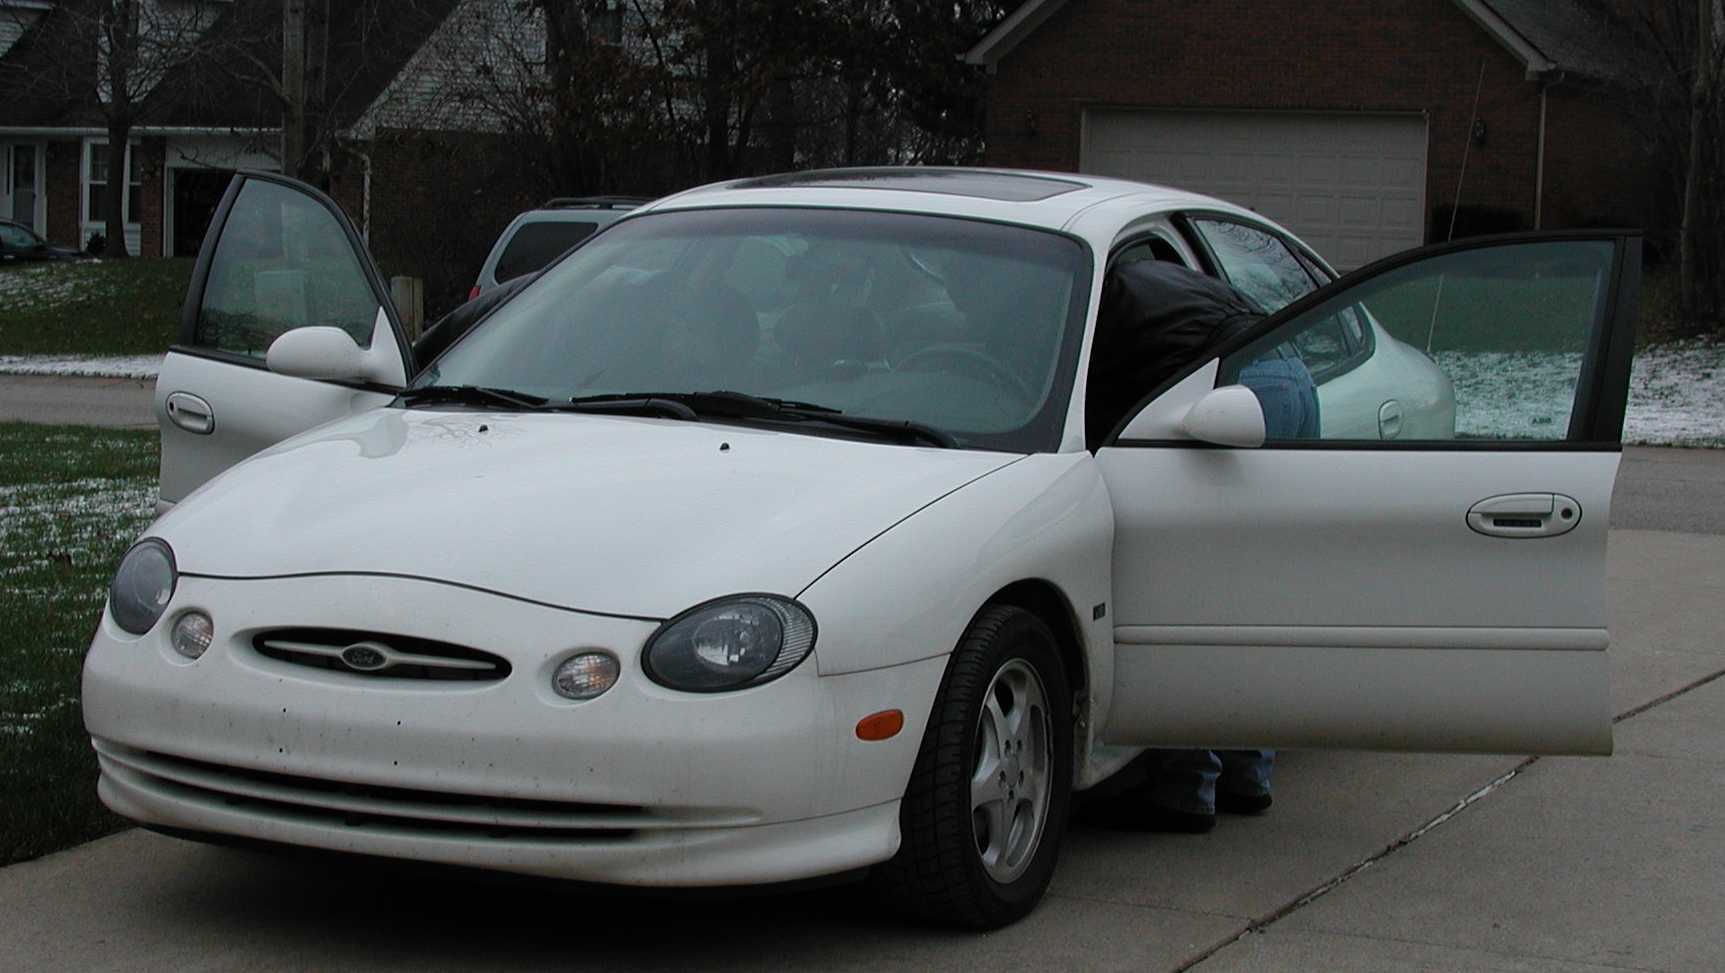  1999 Ford Taurus SHO